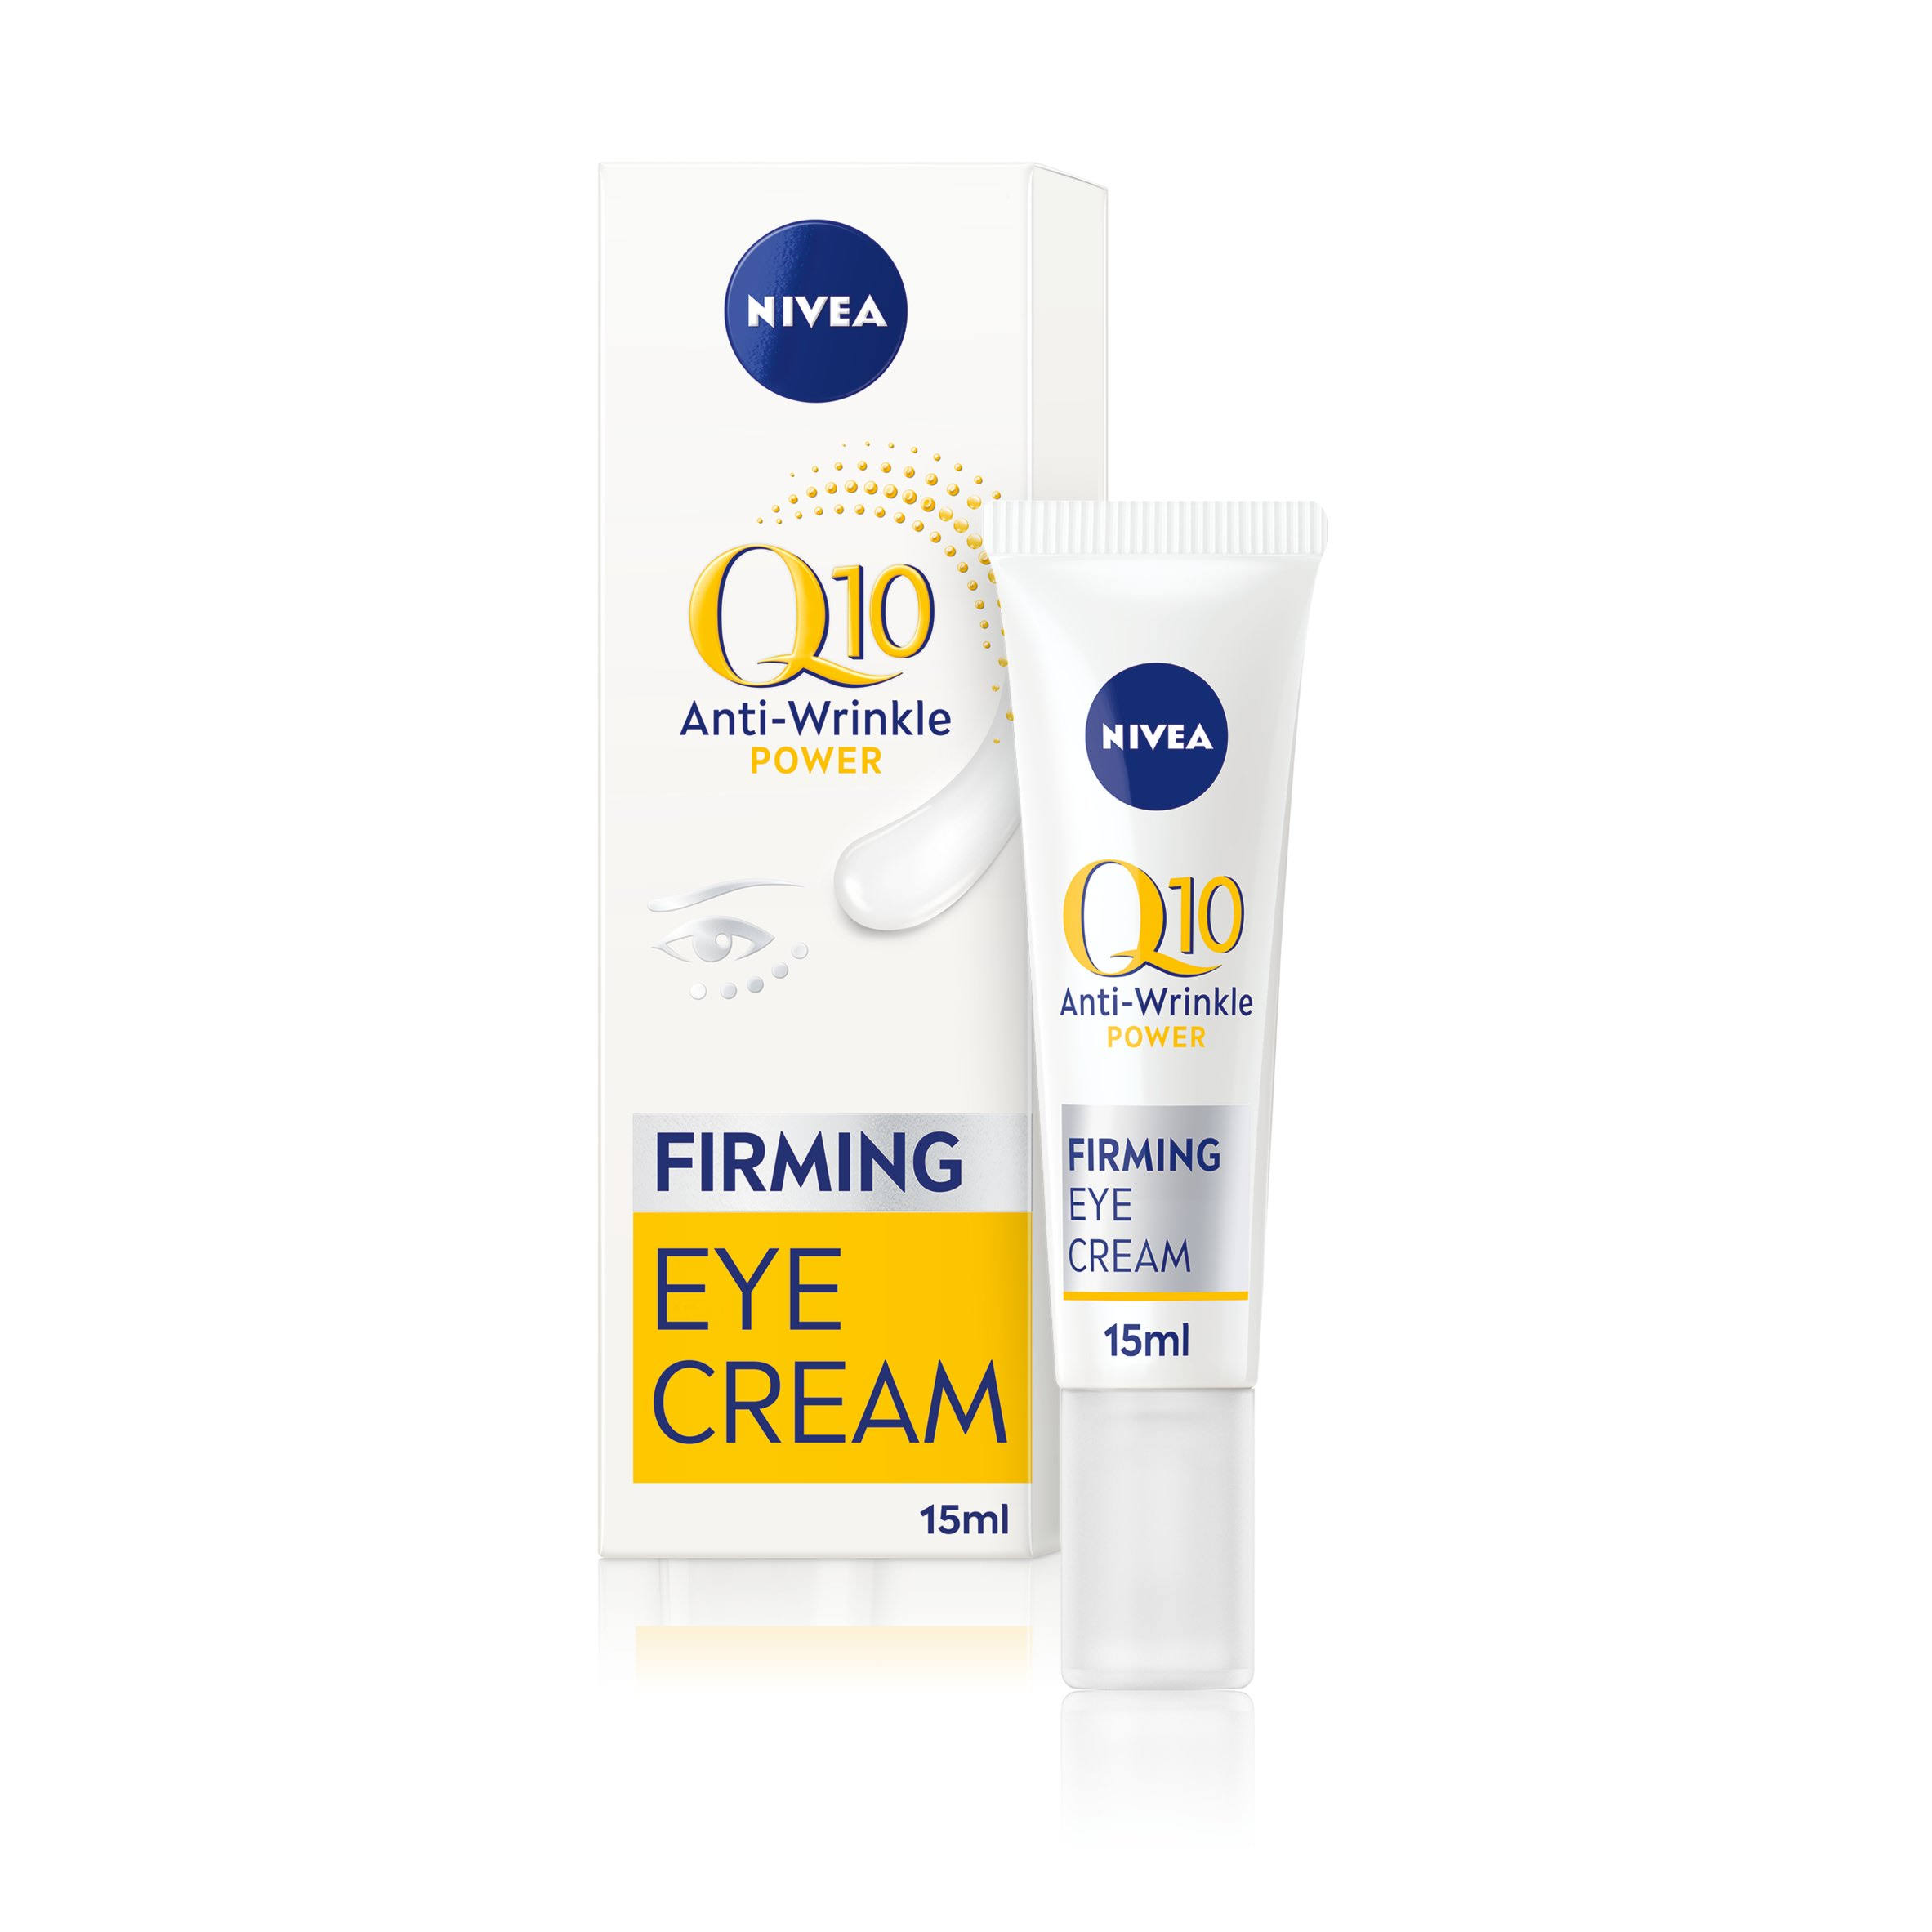 Nivea Q10 Power Anti-Wrinkle + Firming Eye Cream - 15ml